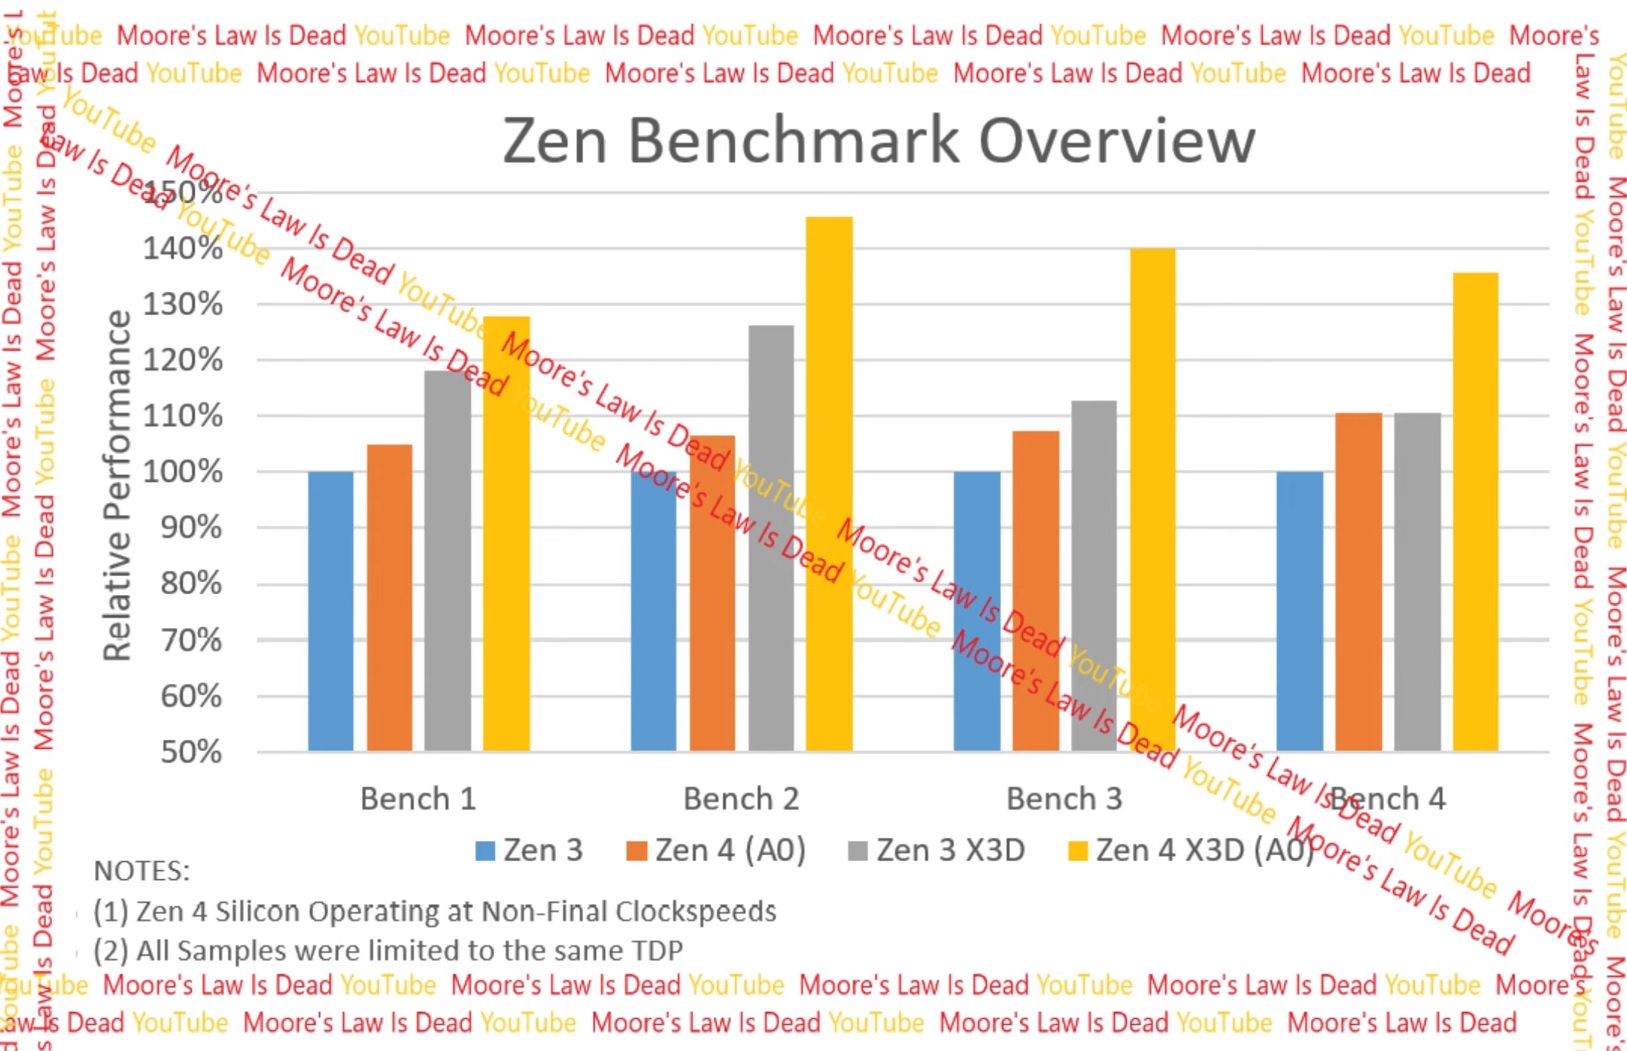 Zen 4 और Zen 4 X3D चिप्स के अफवाह वाले बेंचमार्क।